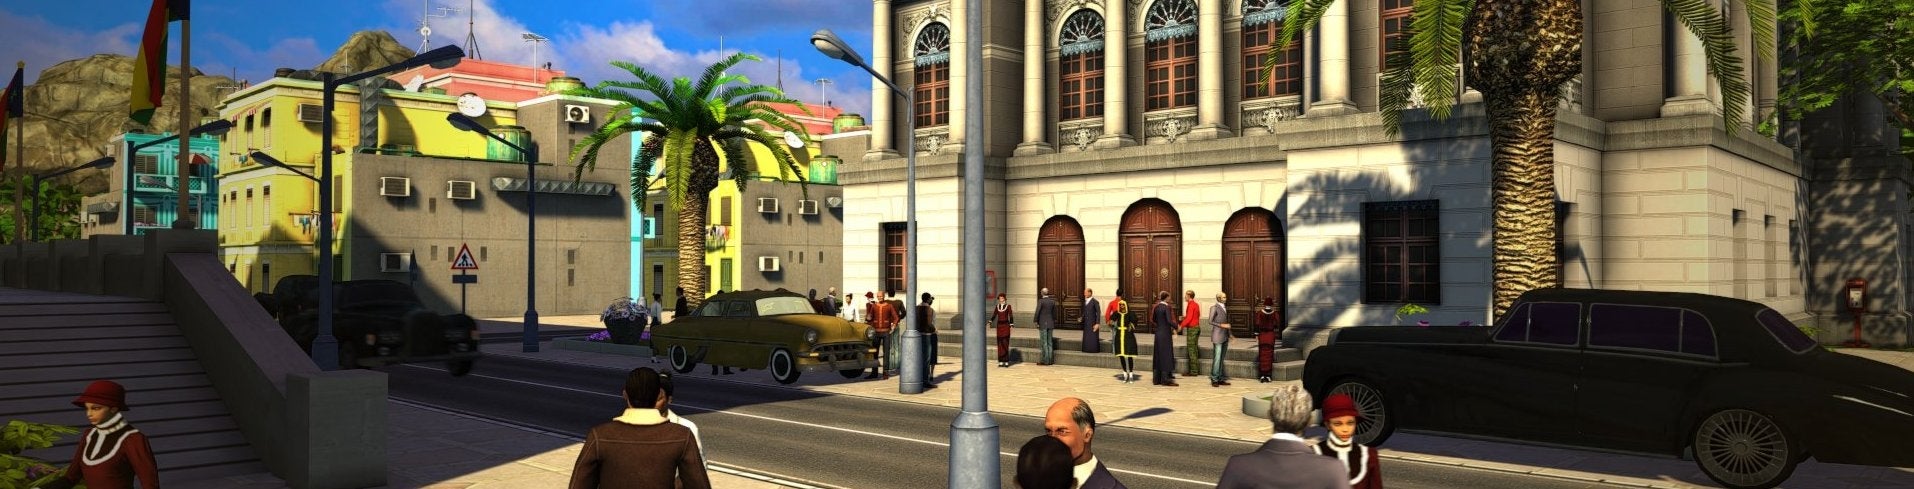 Image for Tropico 5 review